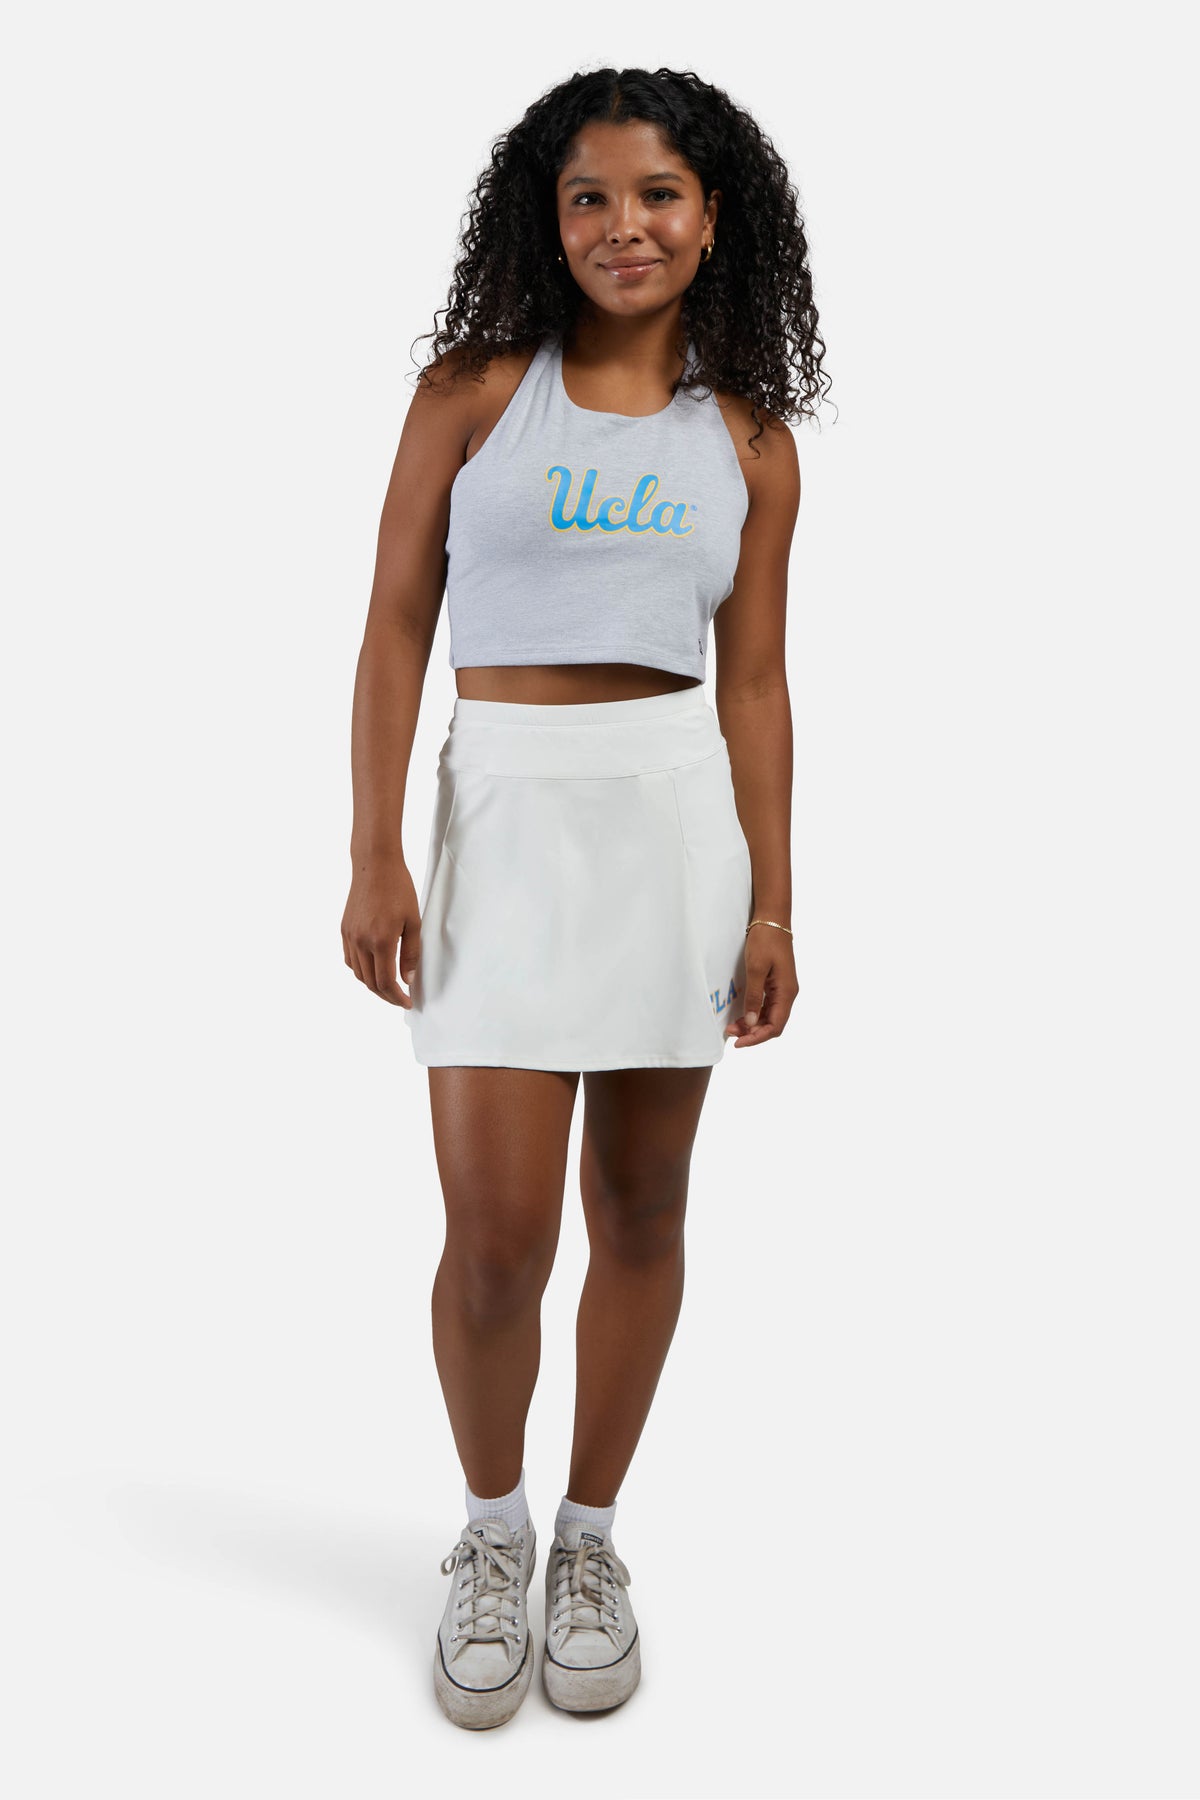 UCLA Athletic Skirt